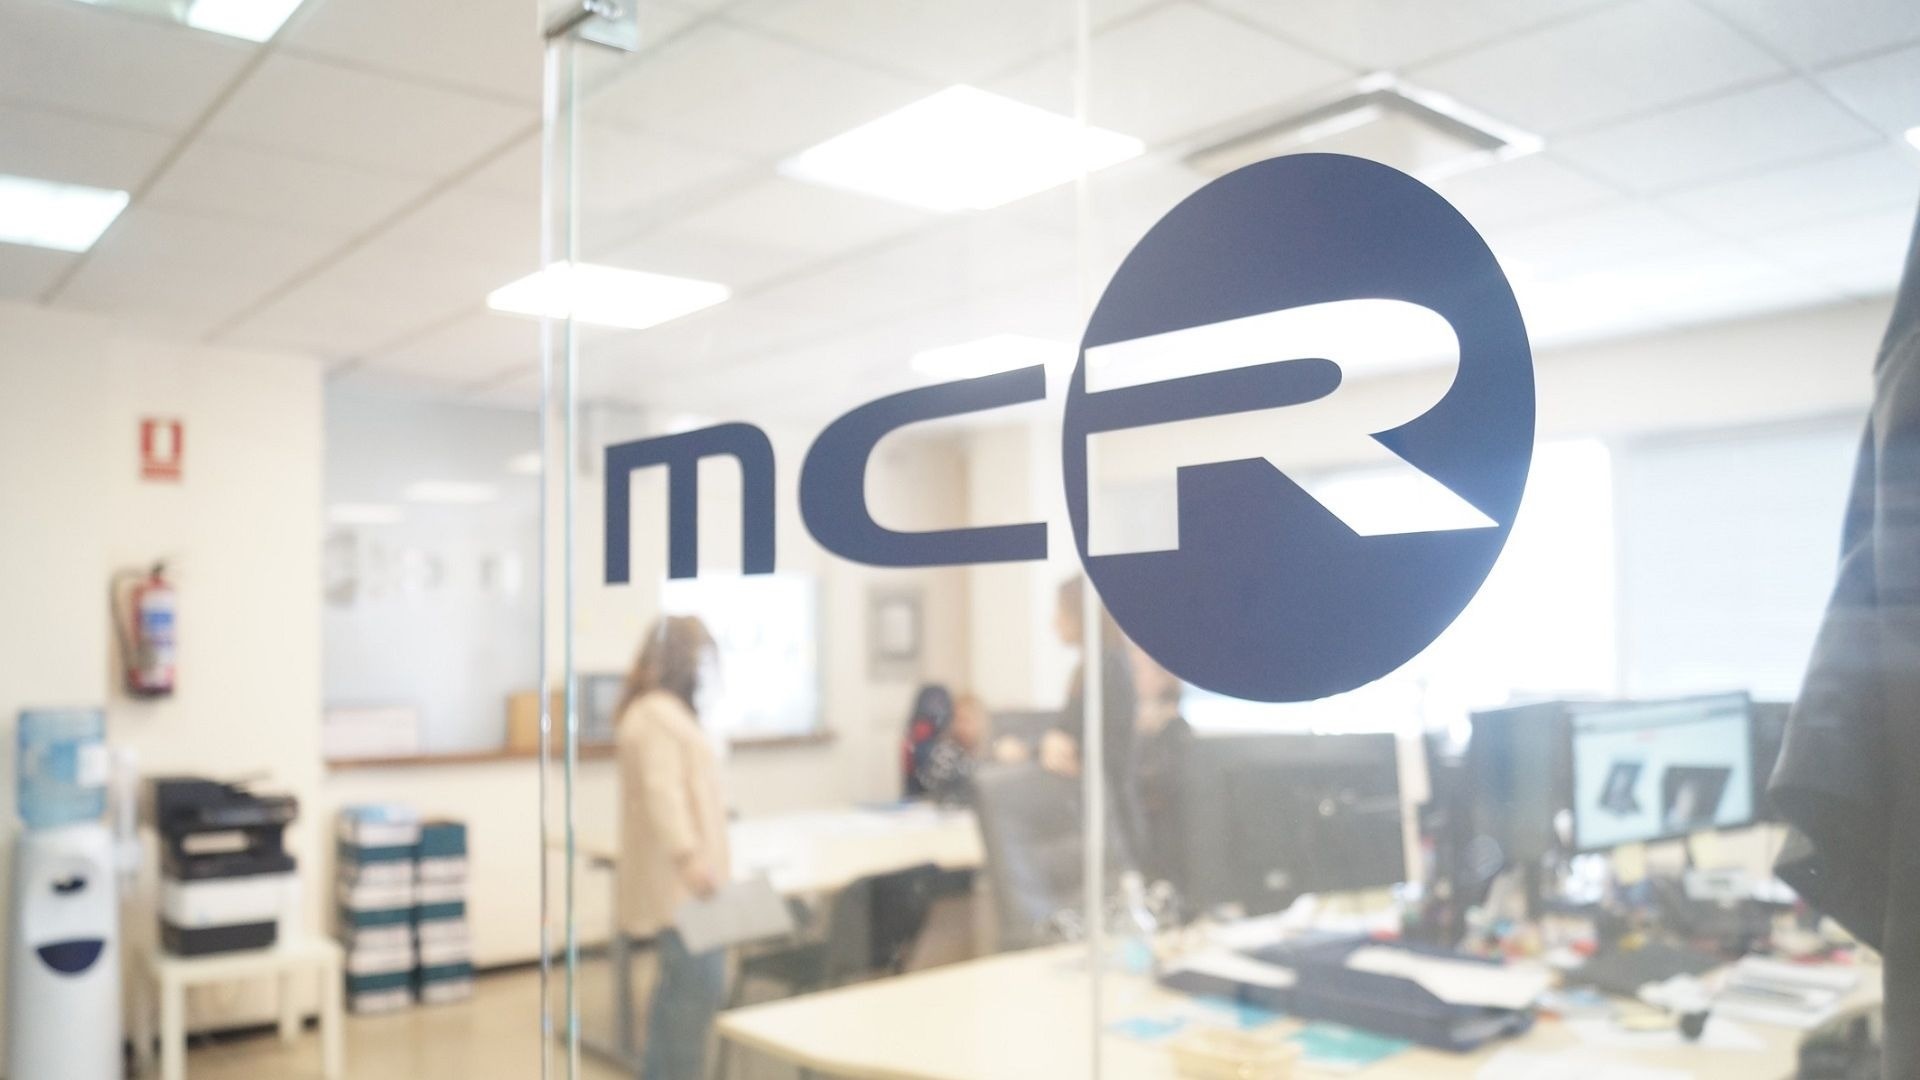 MCR - Oficinas